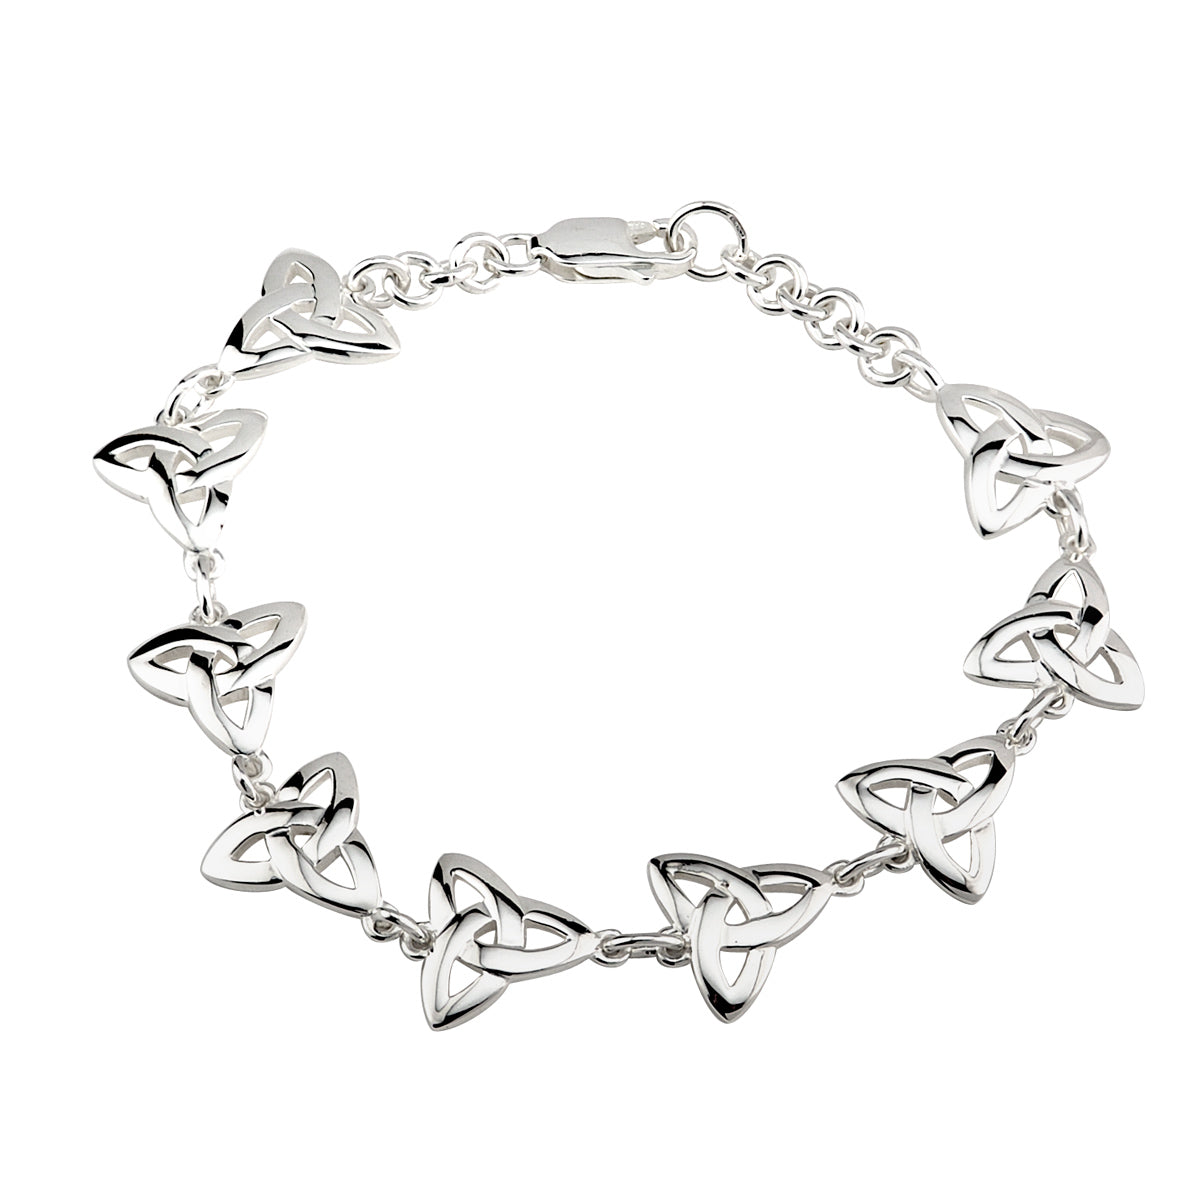 Stock image of sterling trinity knot bracelet s5302 from Solvar